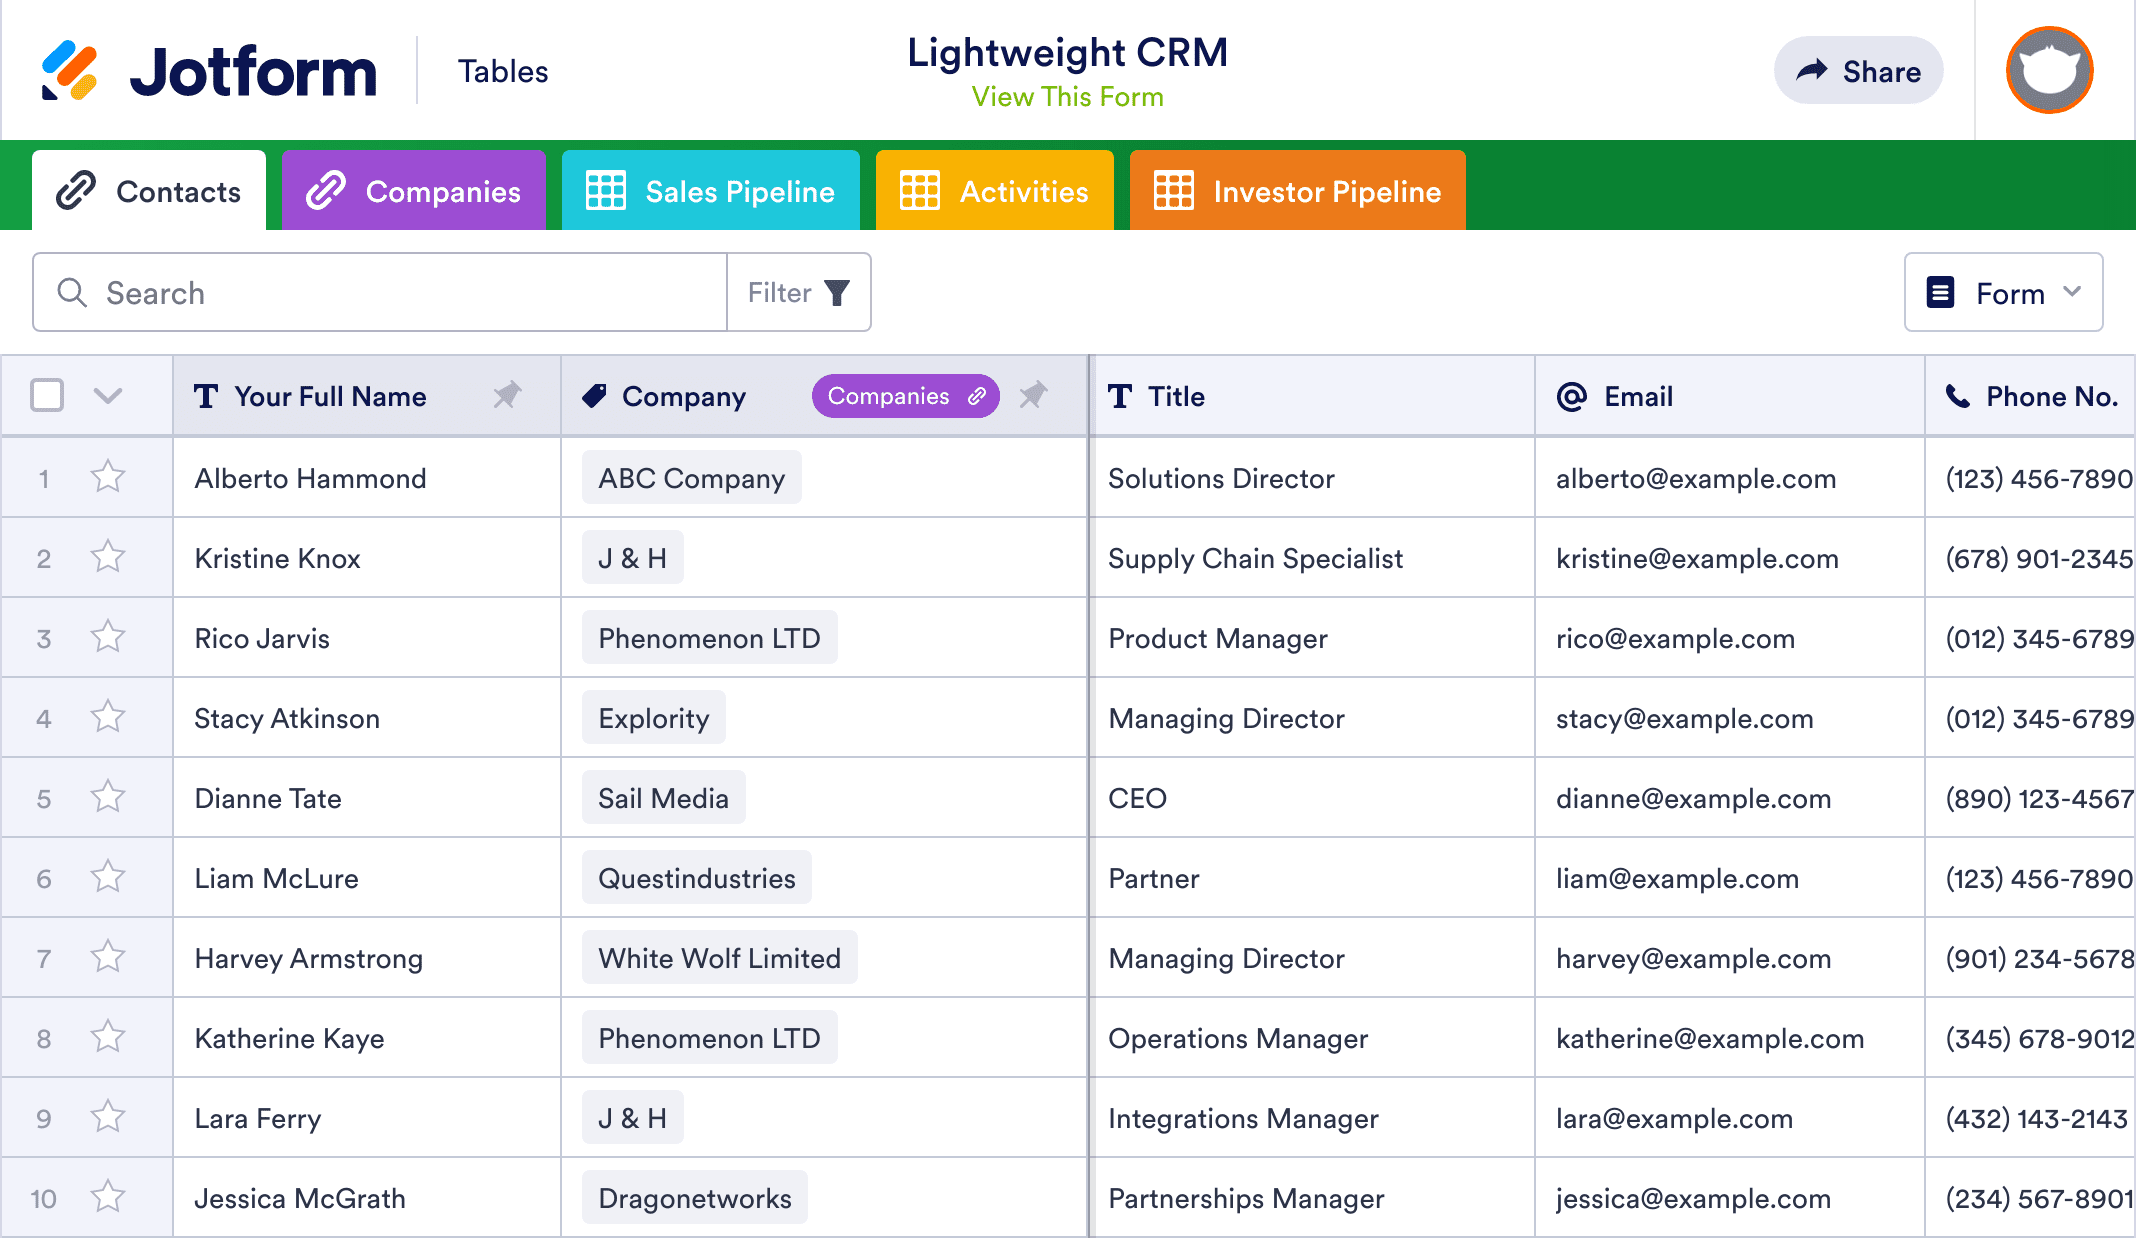 Lightweight CRM